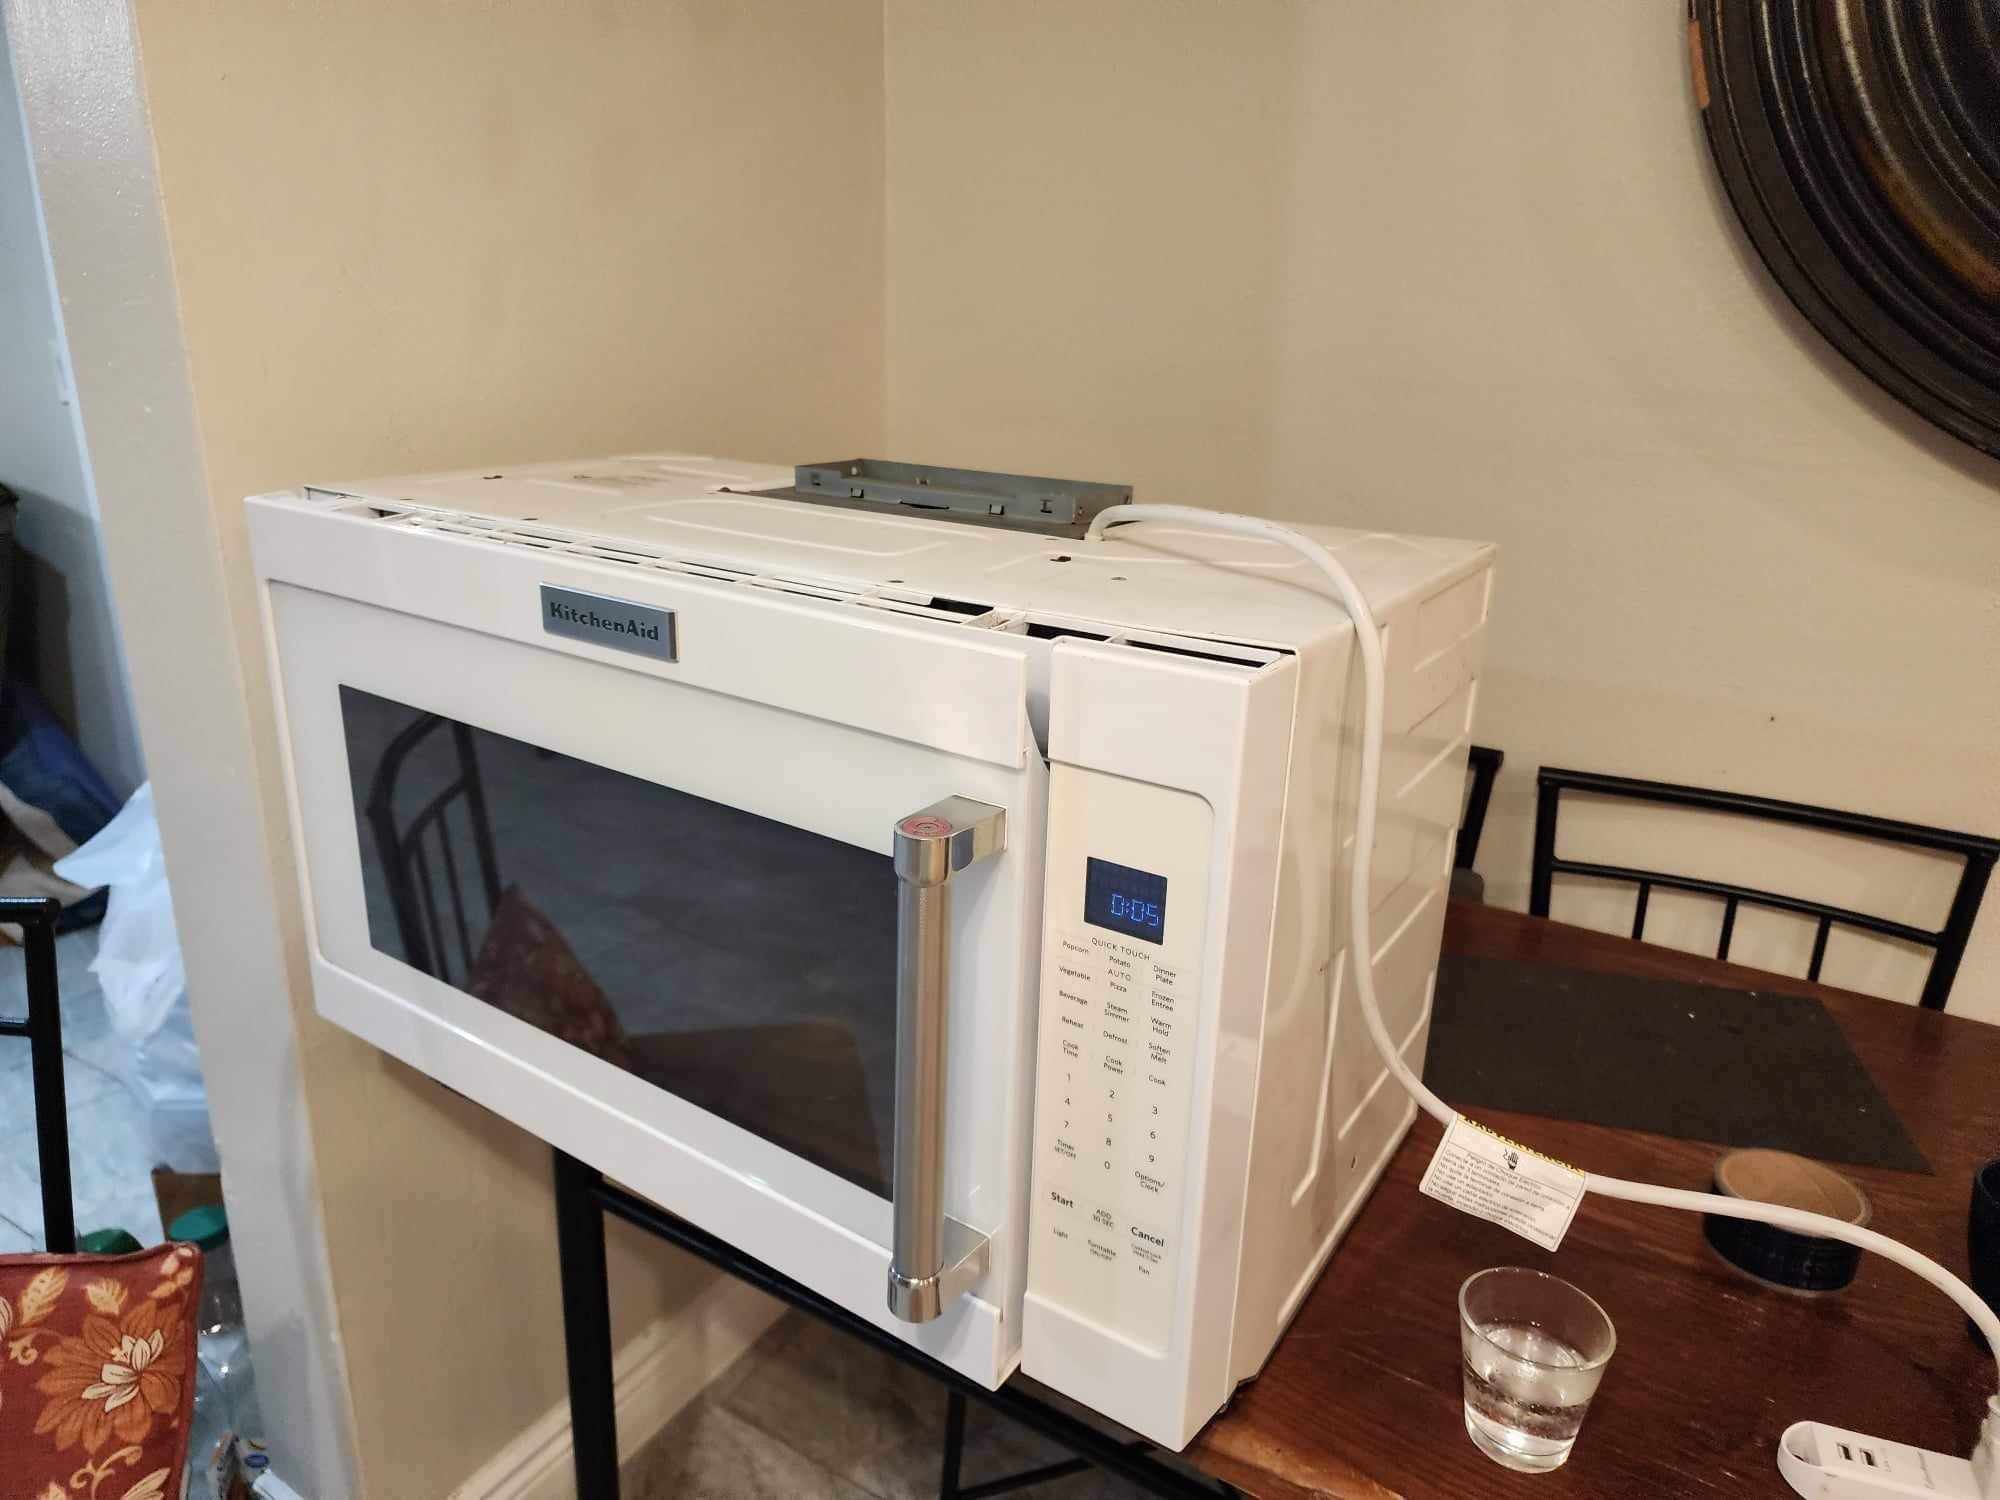 Kitchenaid Microwave 